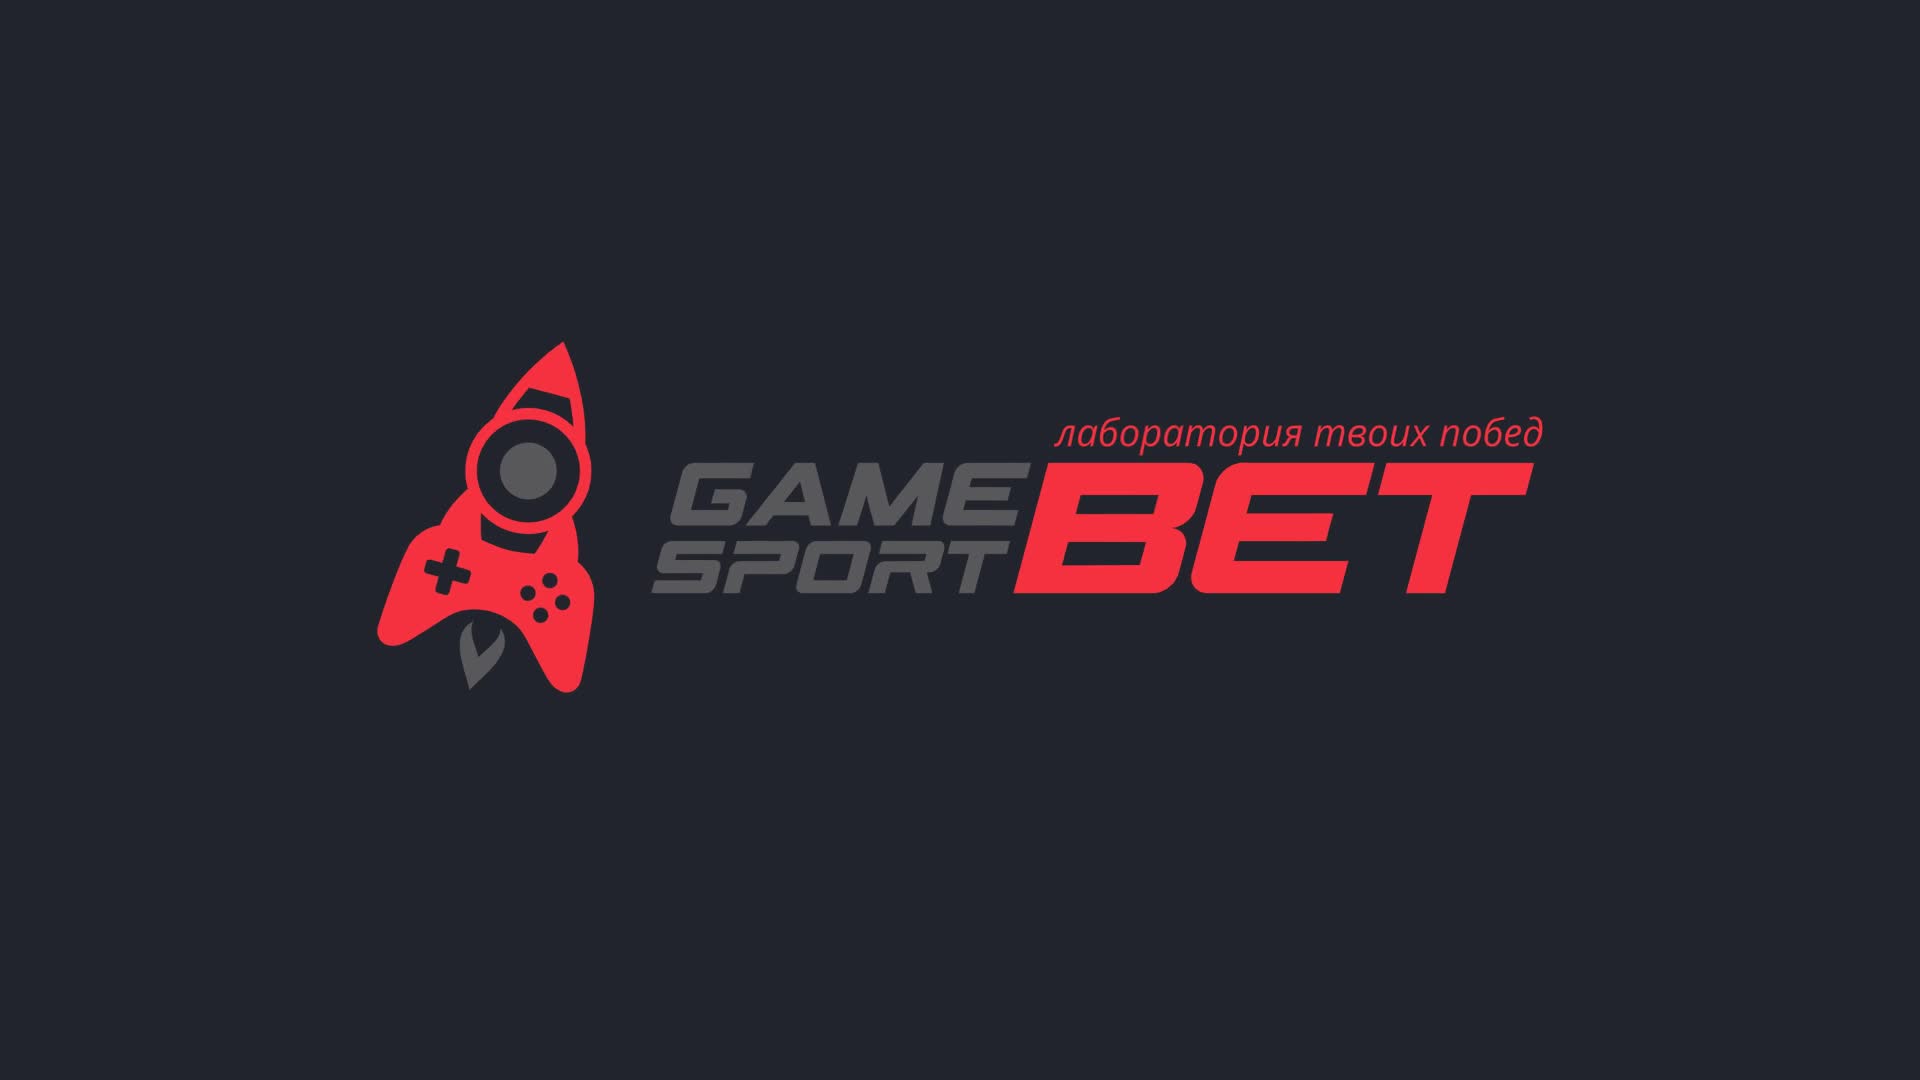 Ооо геймспорт. Gamesport логотип. Game Sport ,Бэт. Горячая линия гейм спорт.